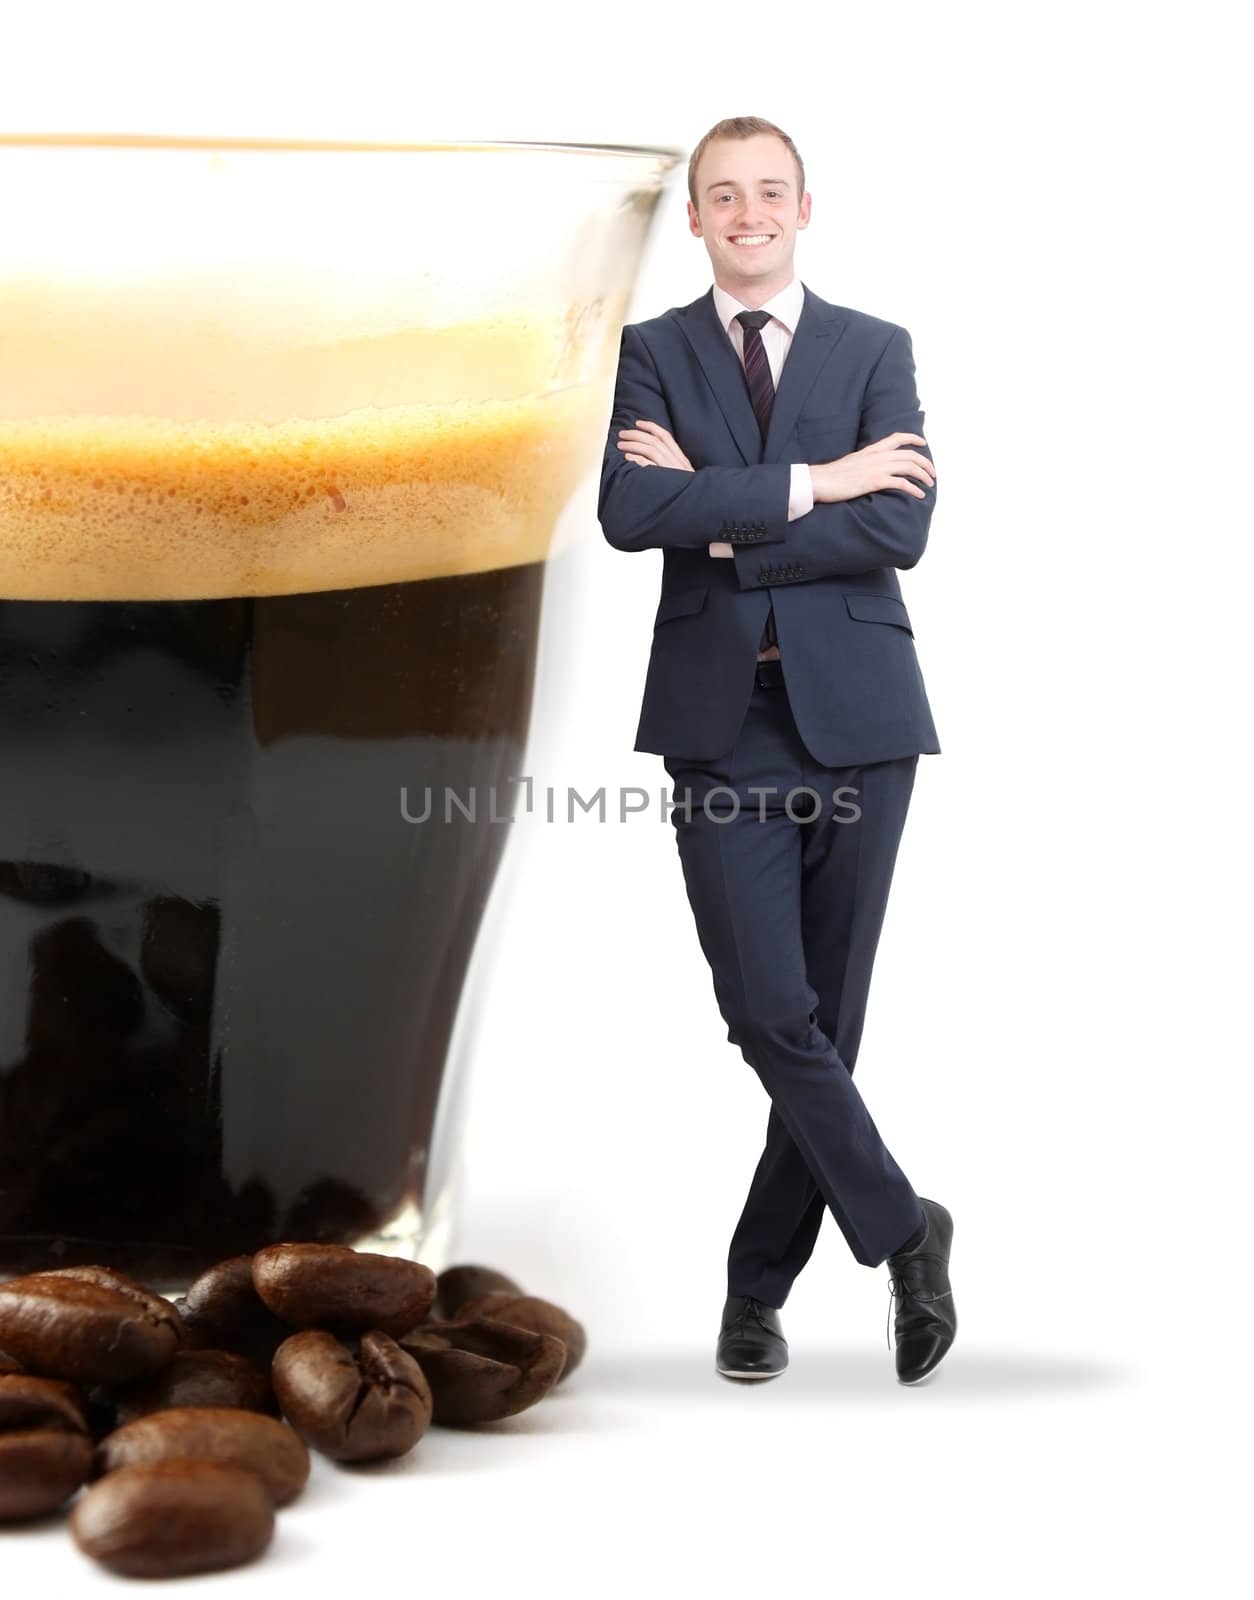 Coffee addict